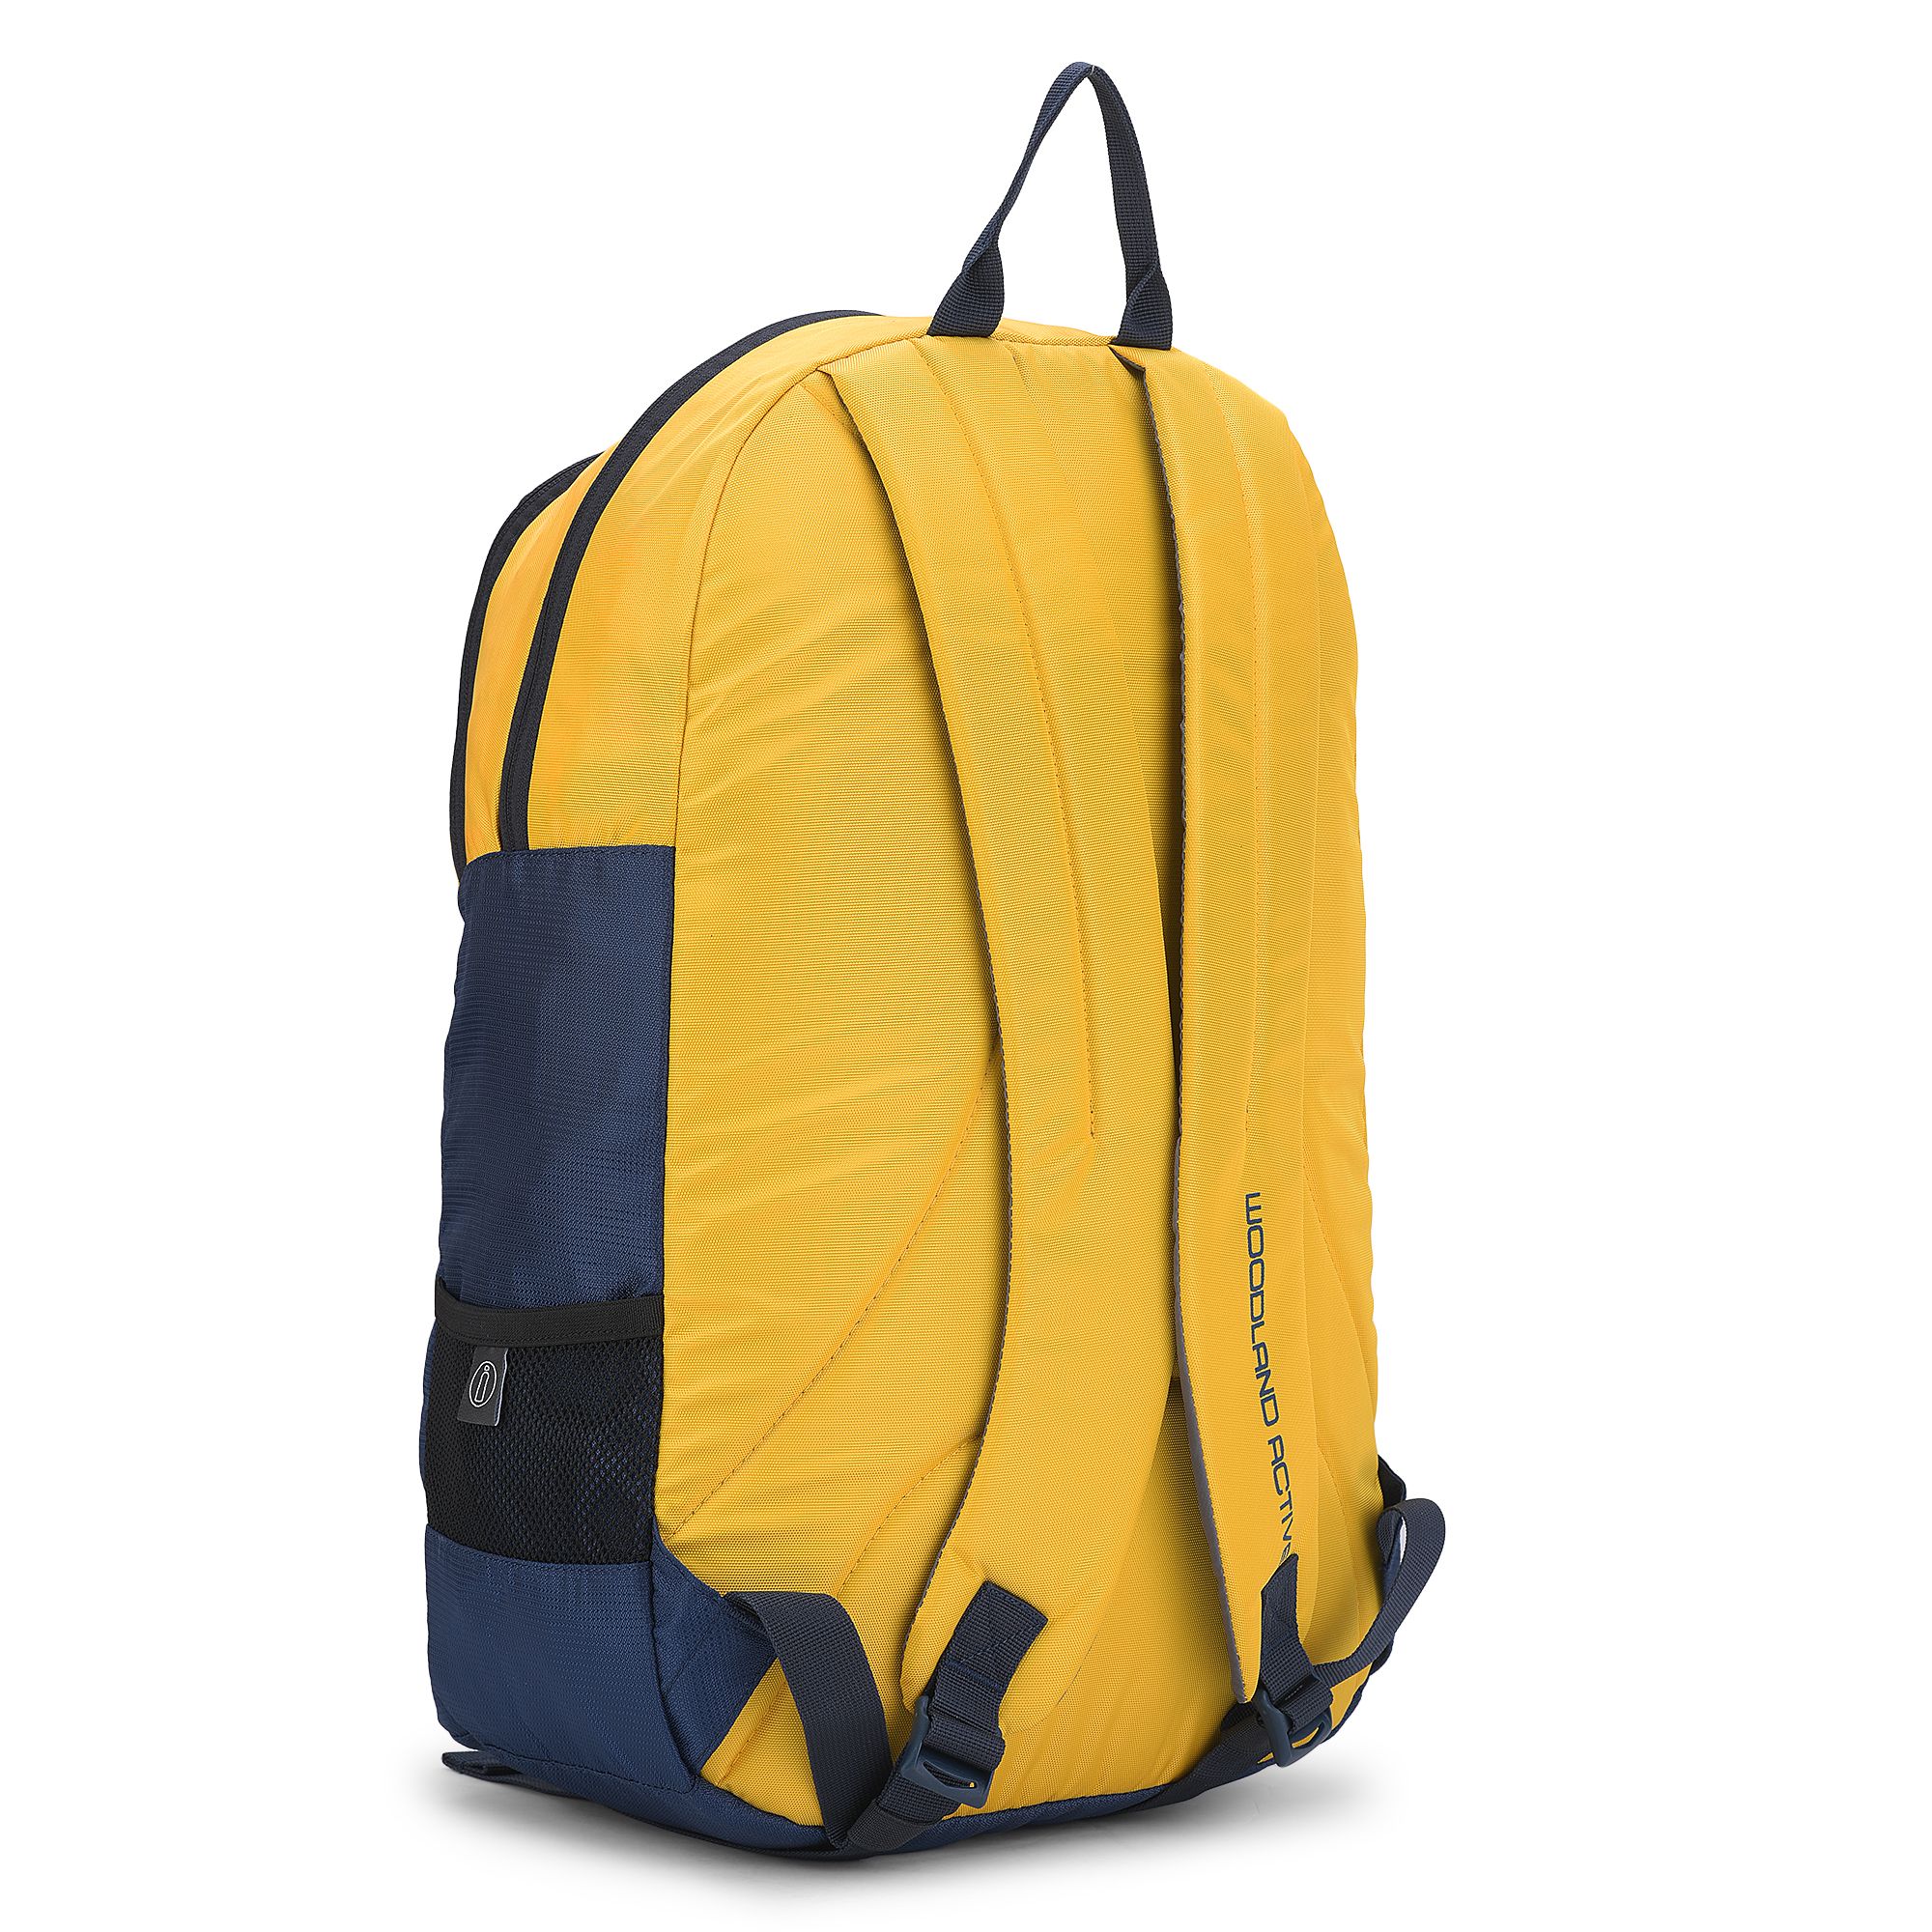 YELLOW/NAVY backpack